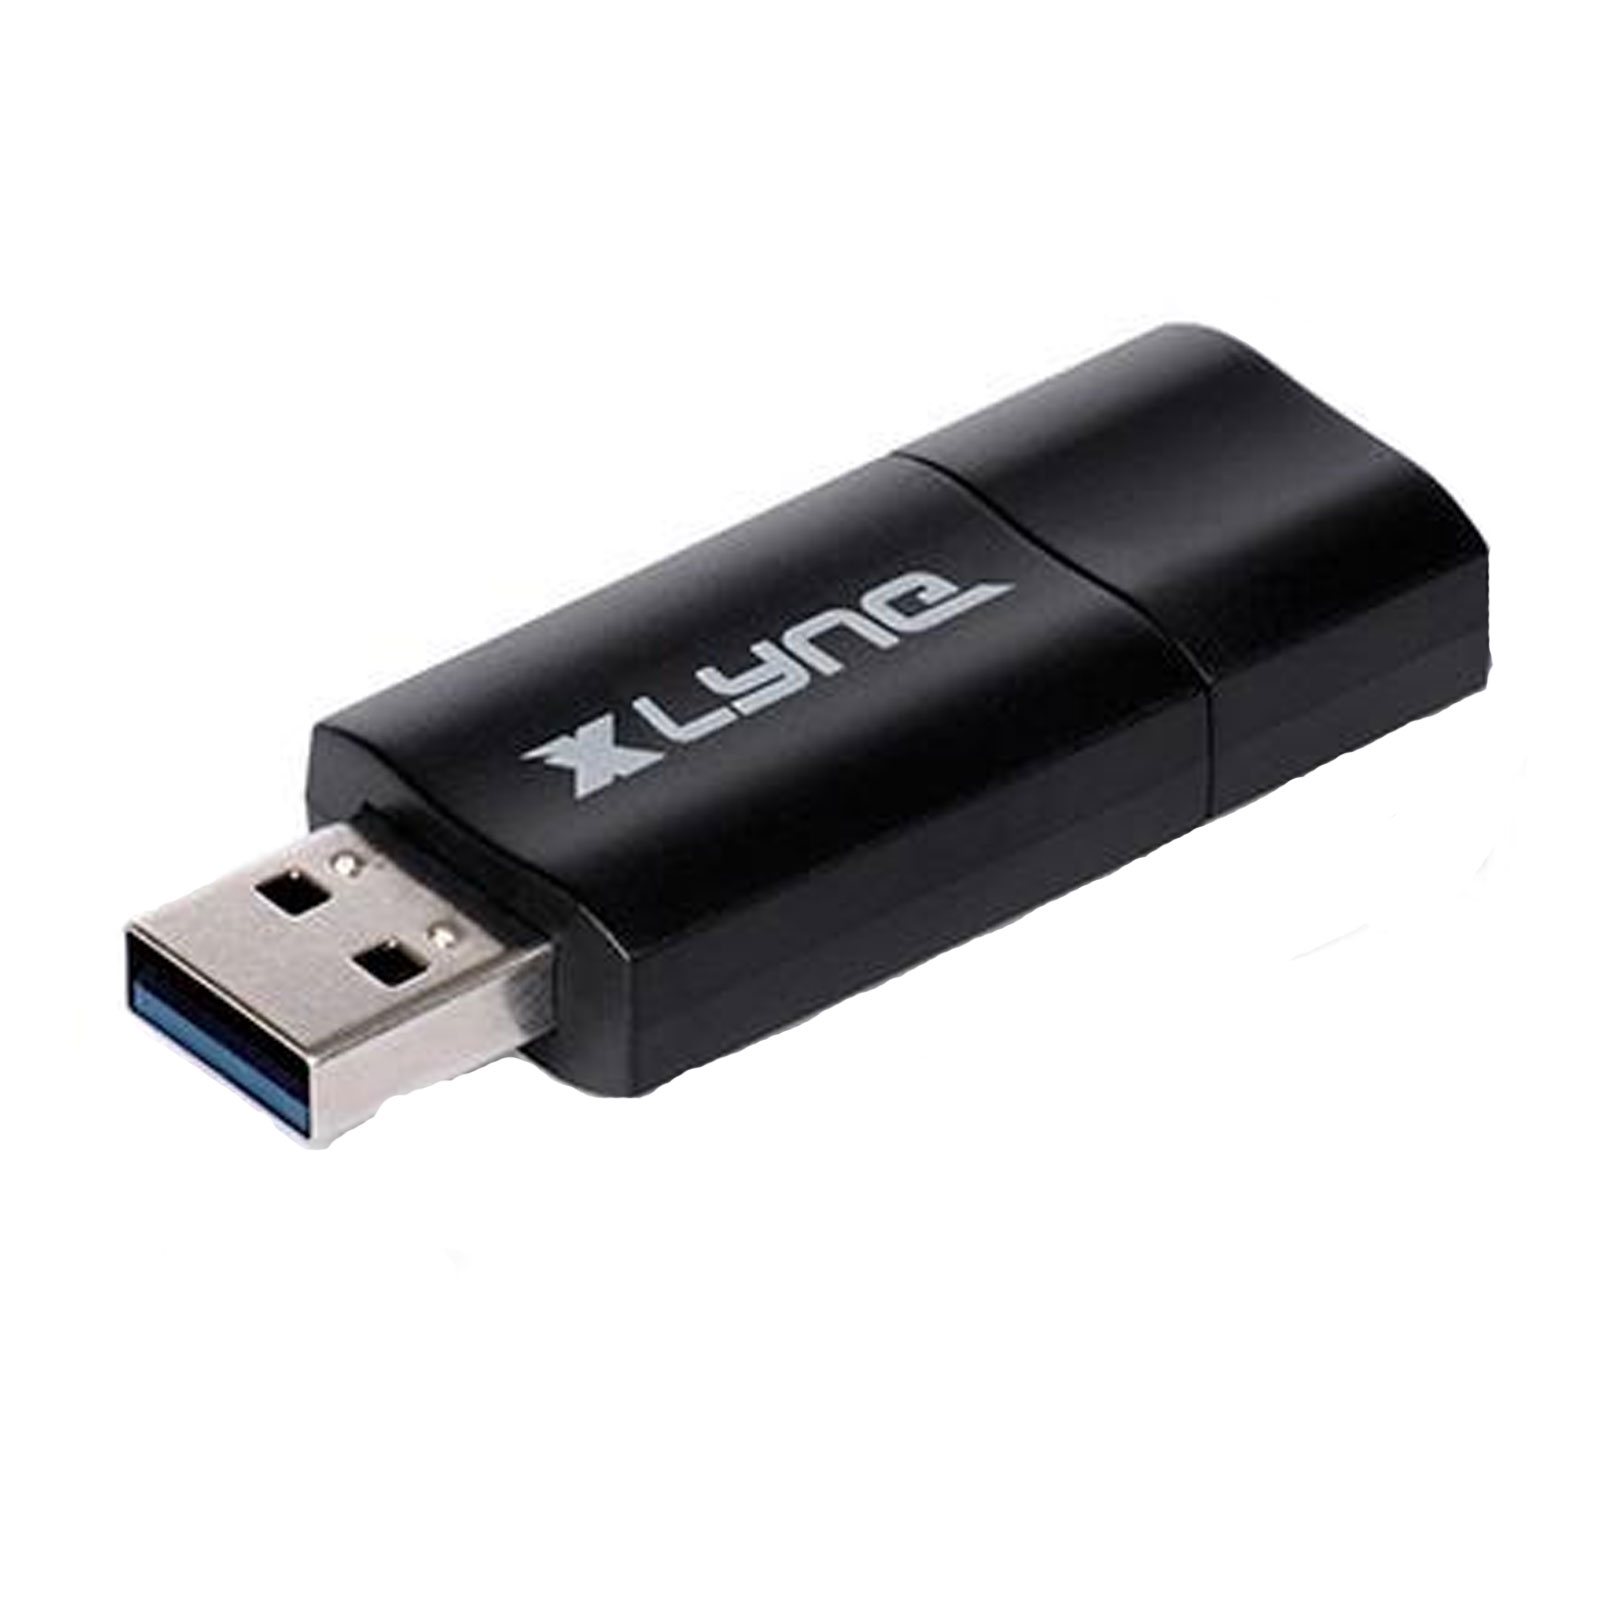 xlyne USB 3.0 Stick Wave 512GB